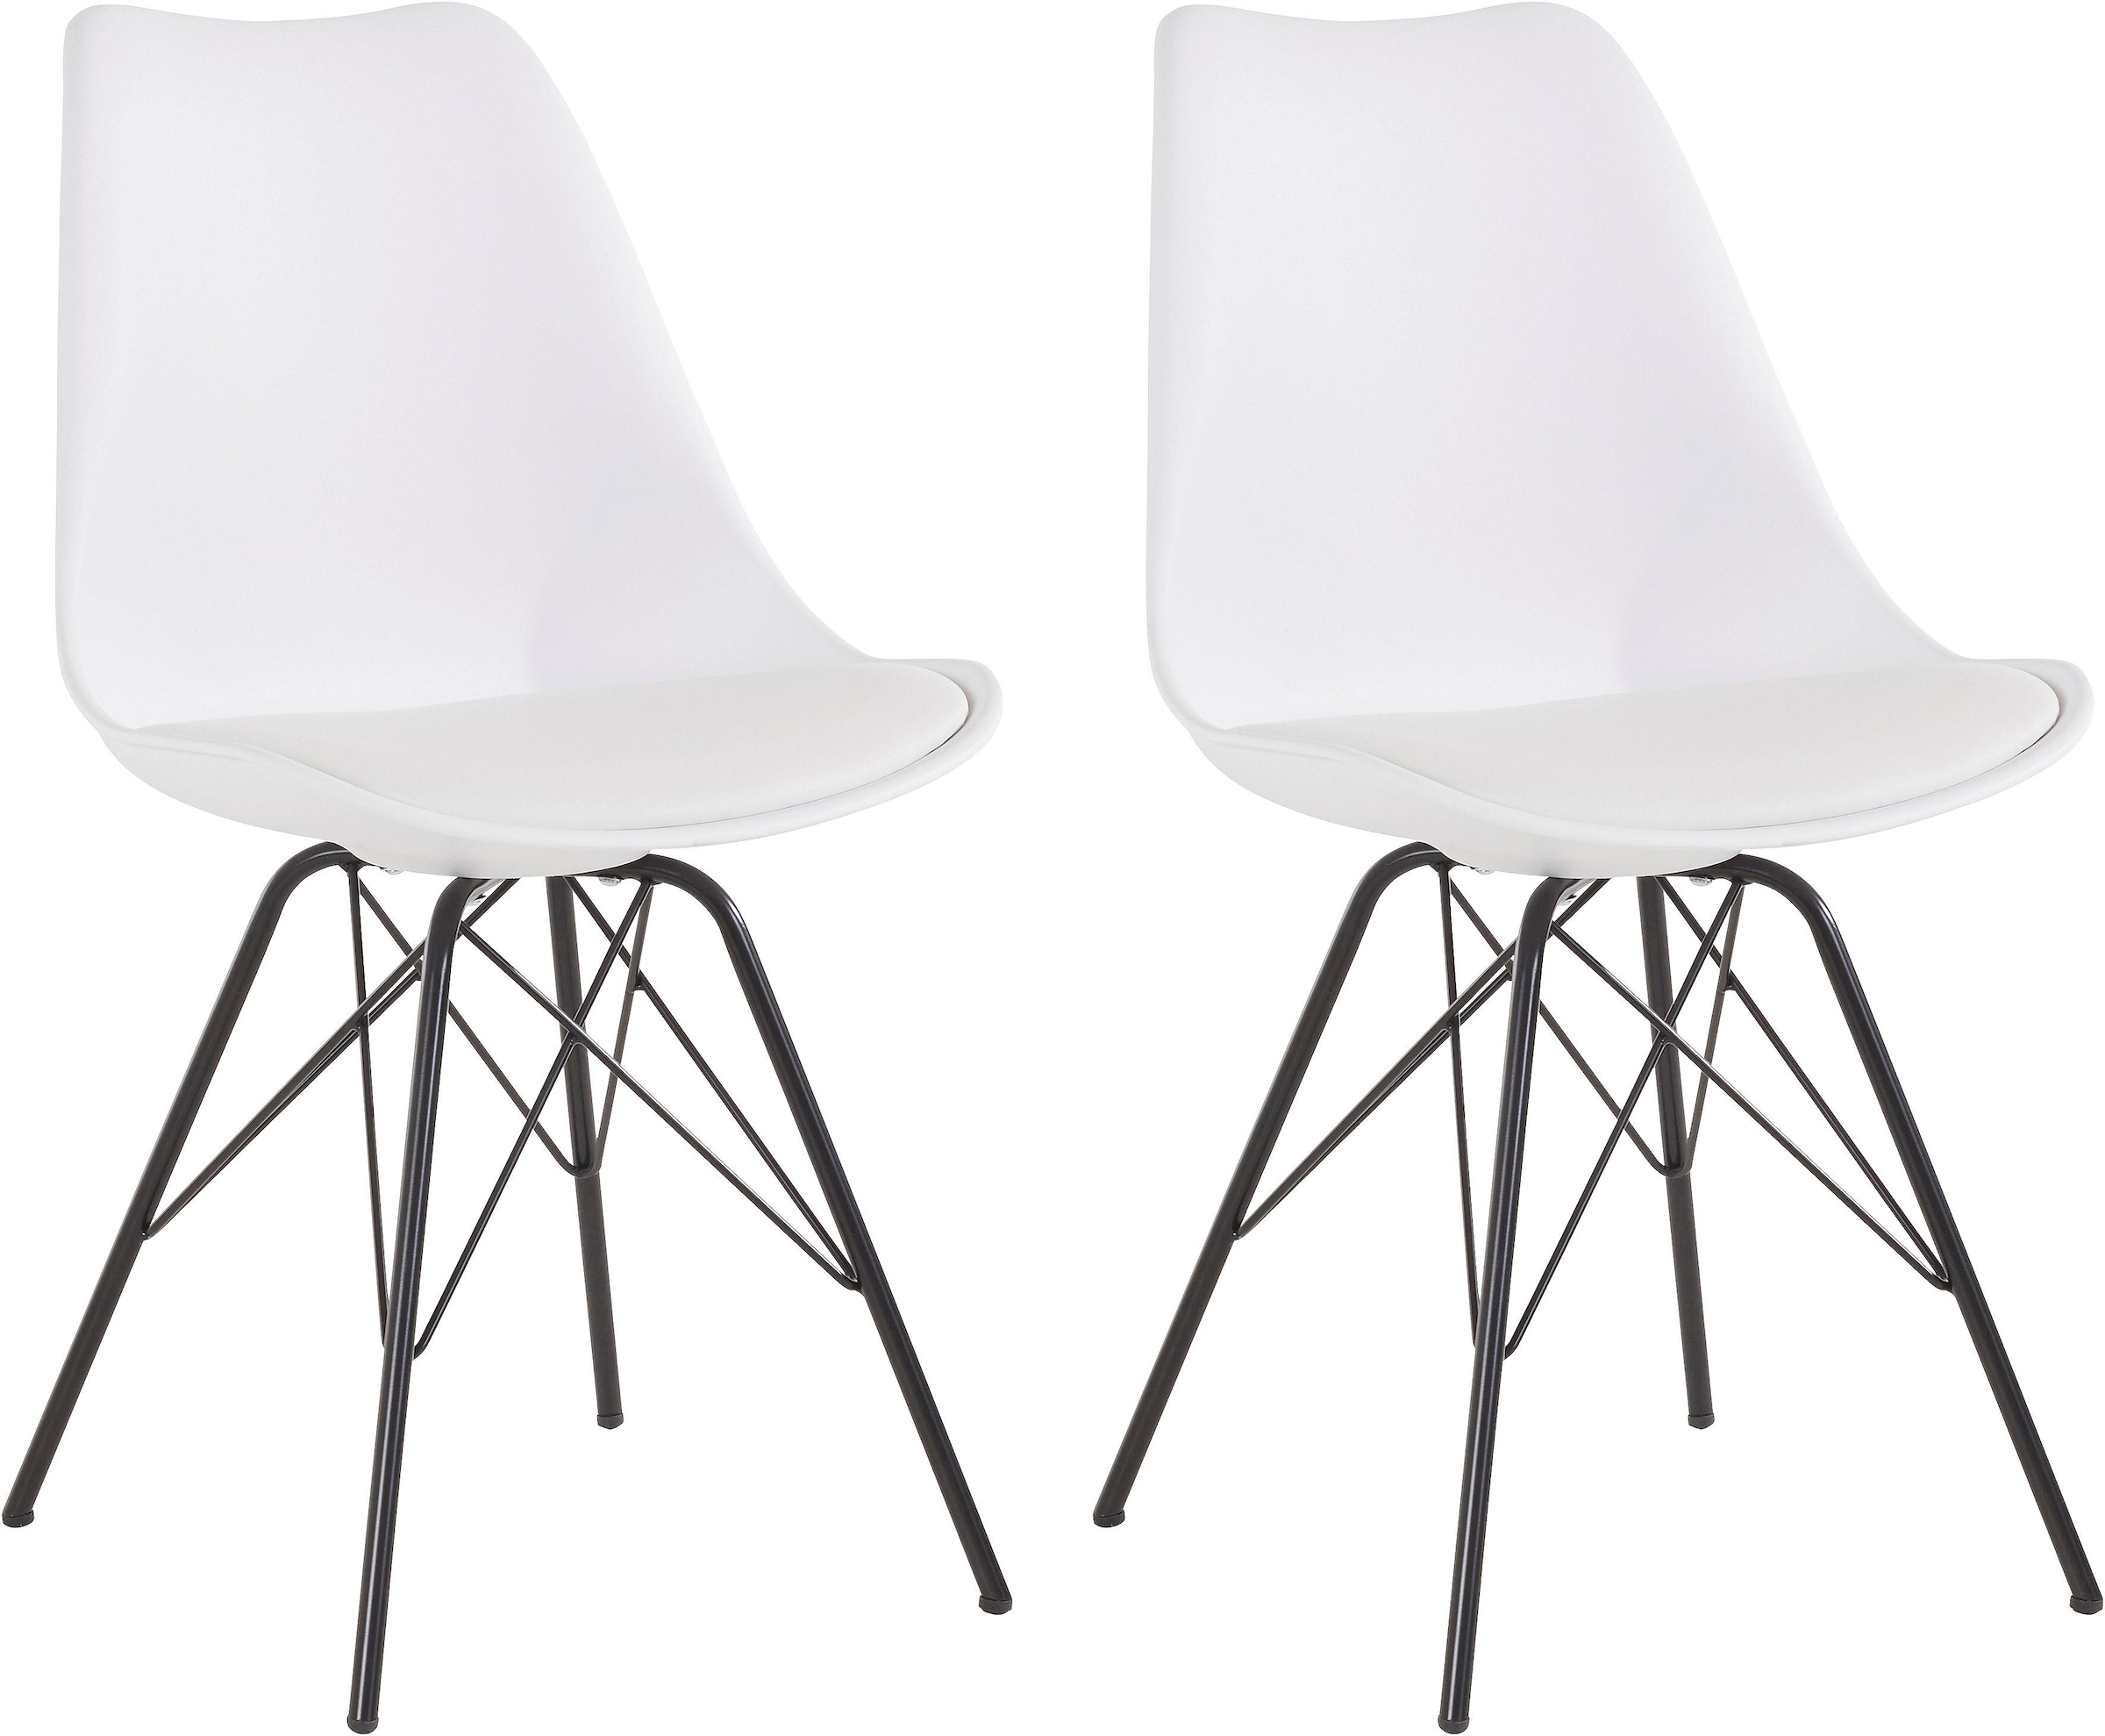 Homexperts 4-Fussstuhl »Ursel 01«, Sitzschale (Set), 2 Sitzkissen kaufen in Kunstleder, Kunstleder St., mit